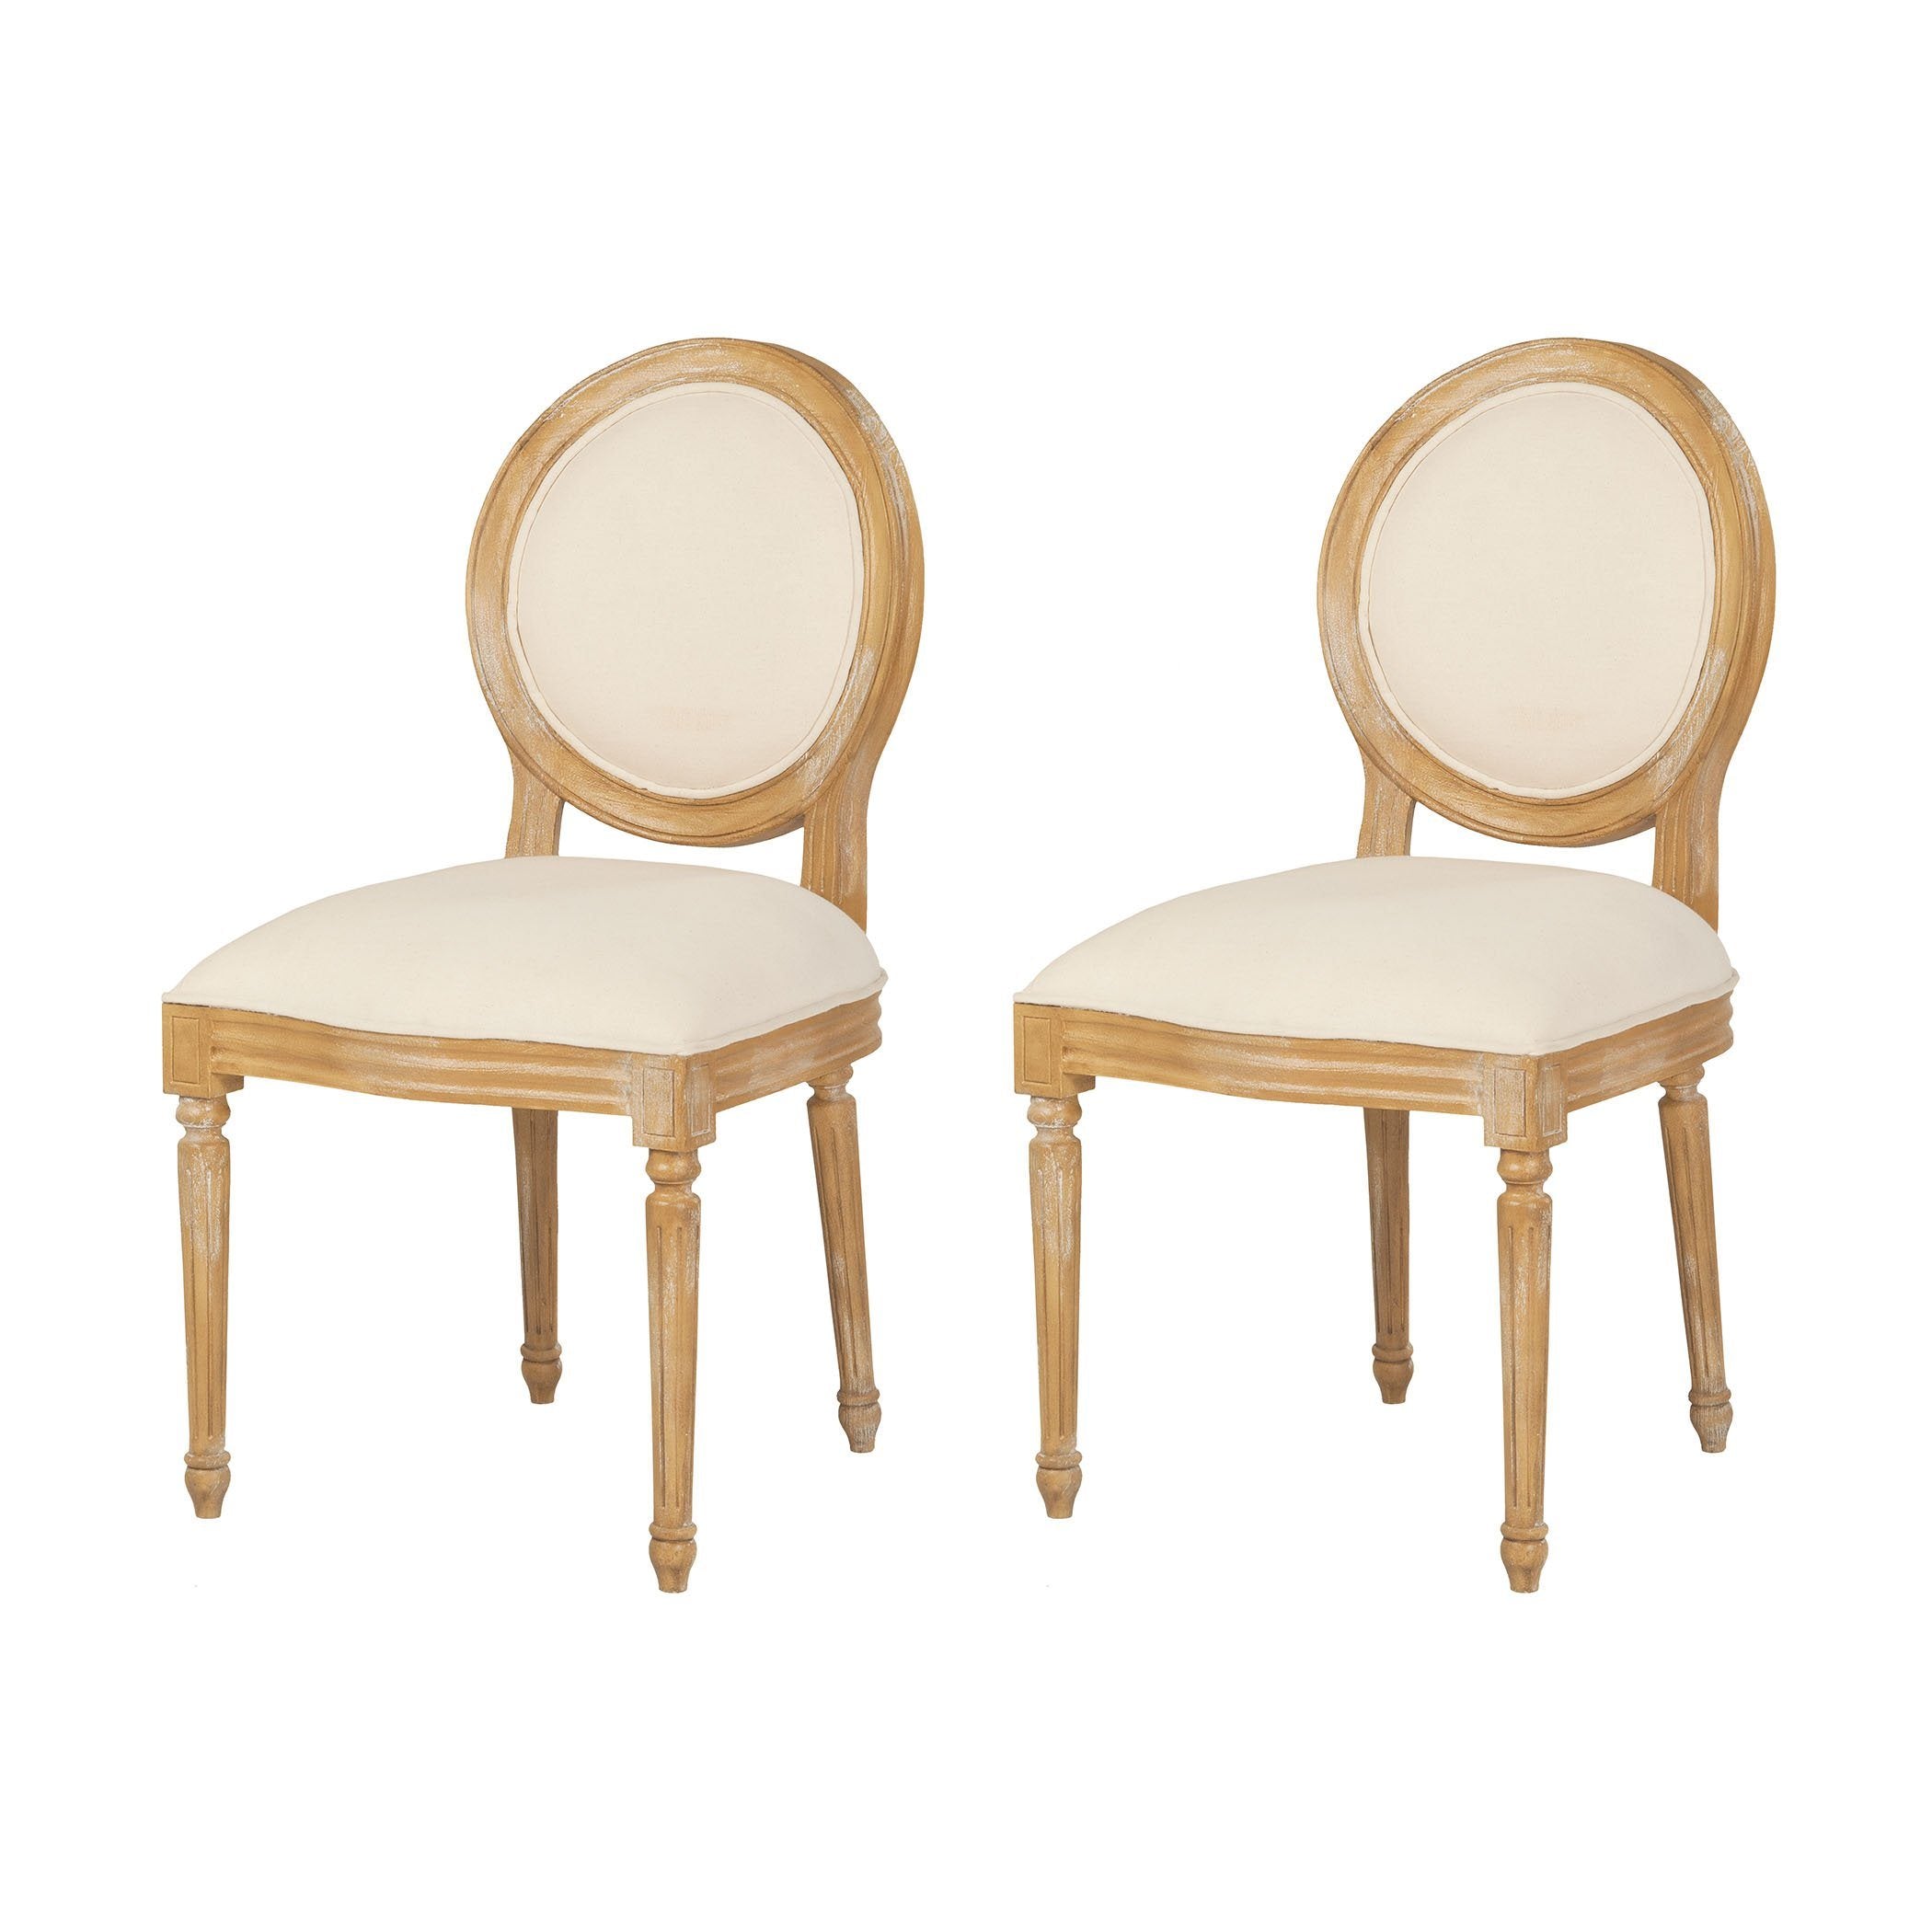 Allcott Side Chair In Artisan Clean Stain - Set of 2 Furniture GuildMaster 